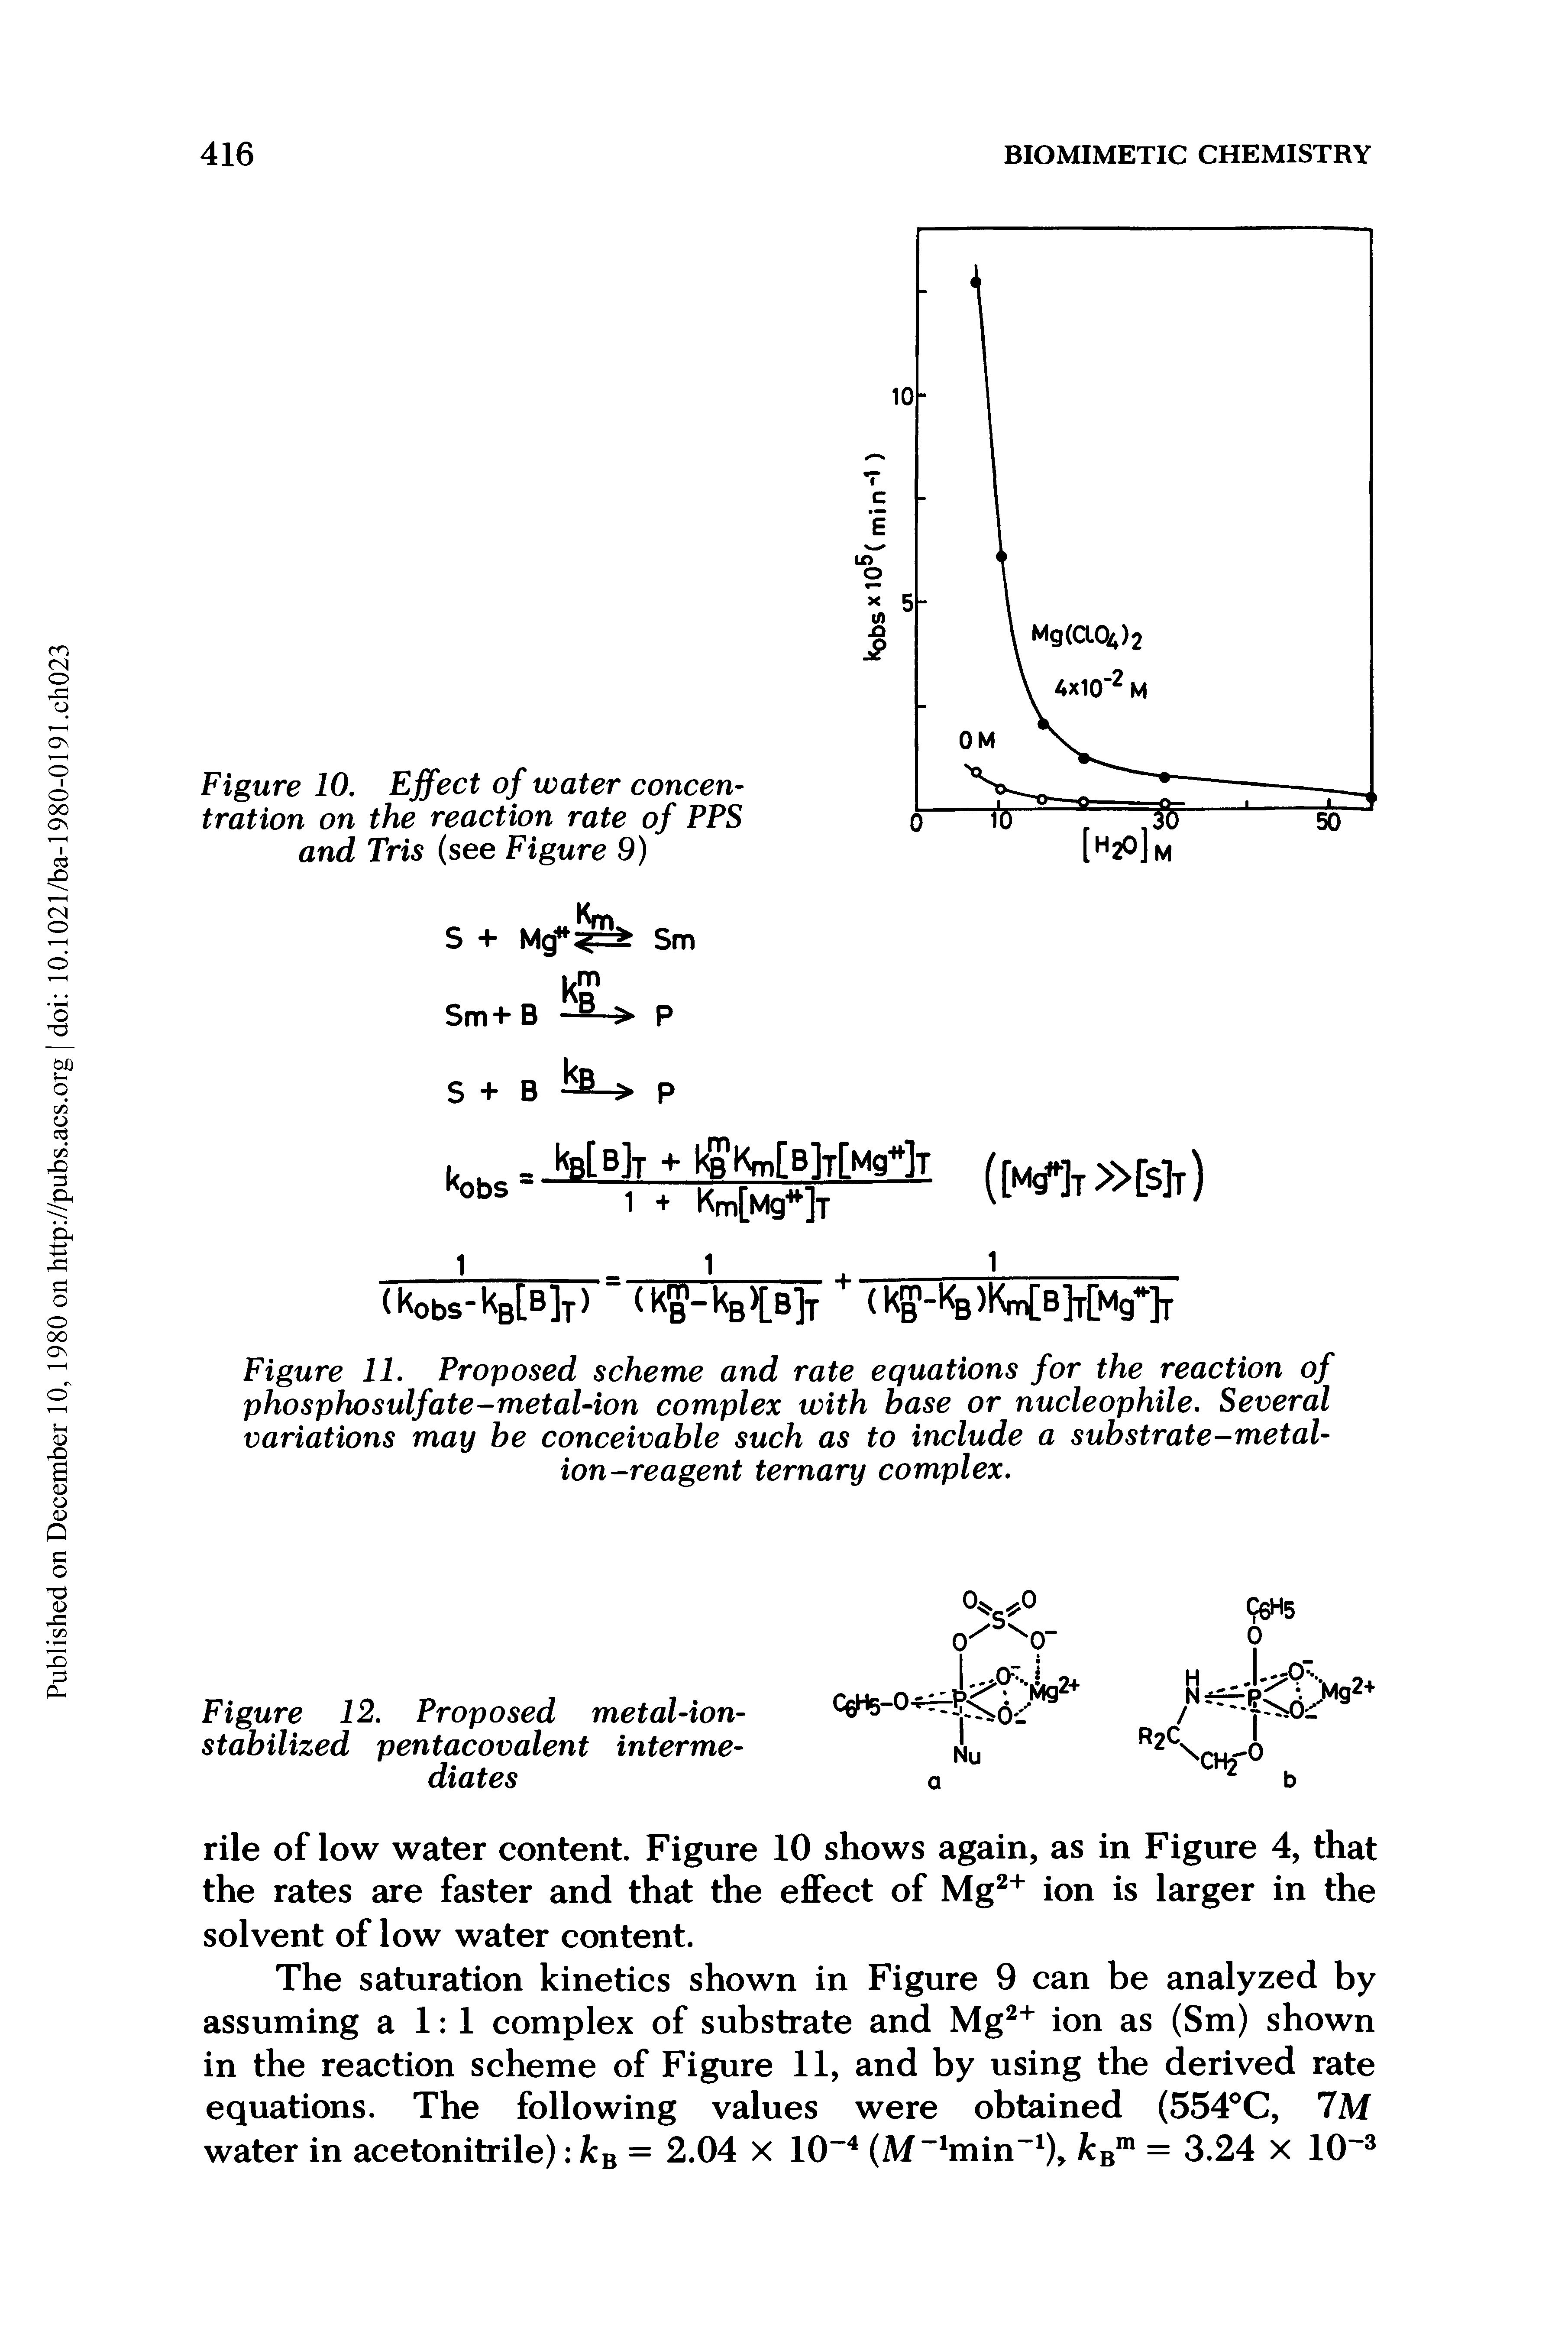 Figure 12. Proposed metal-ion-stabilized pentacovalent intermediates...